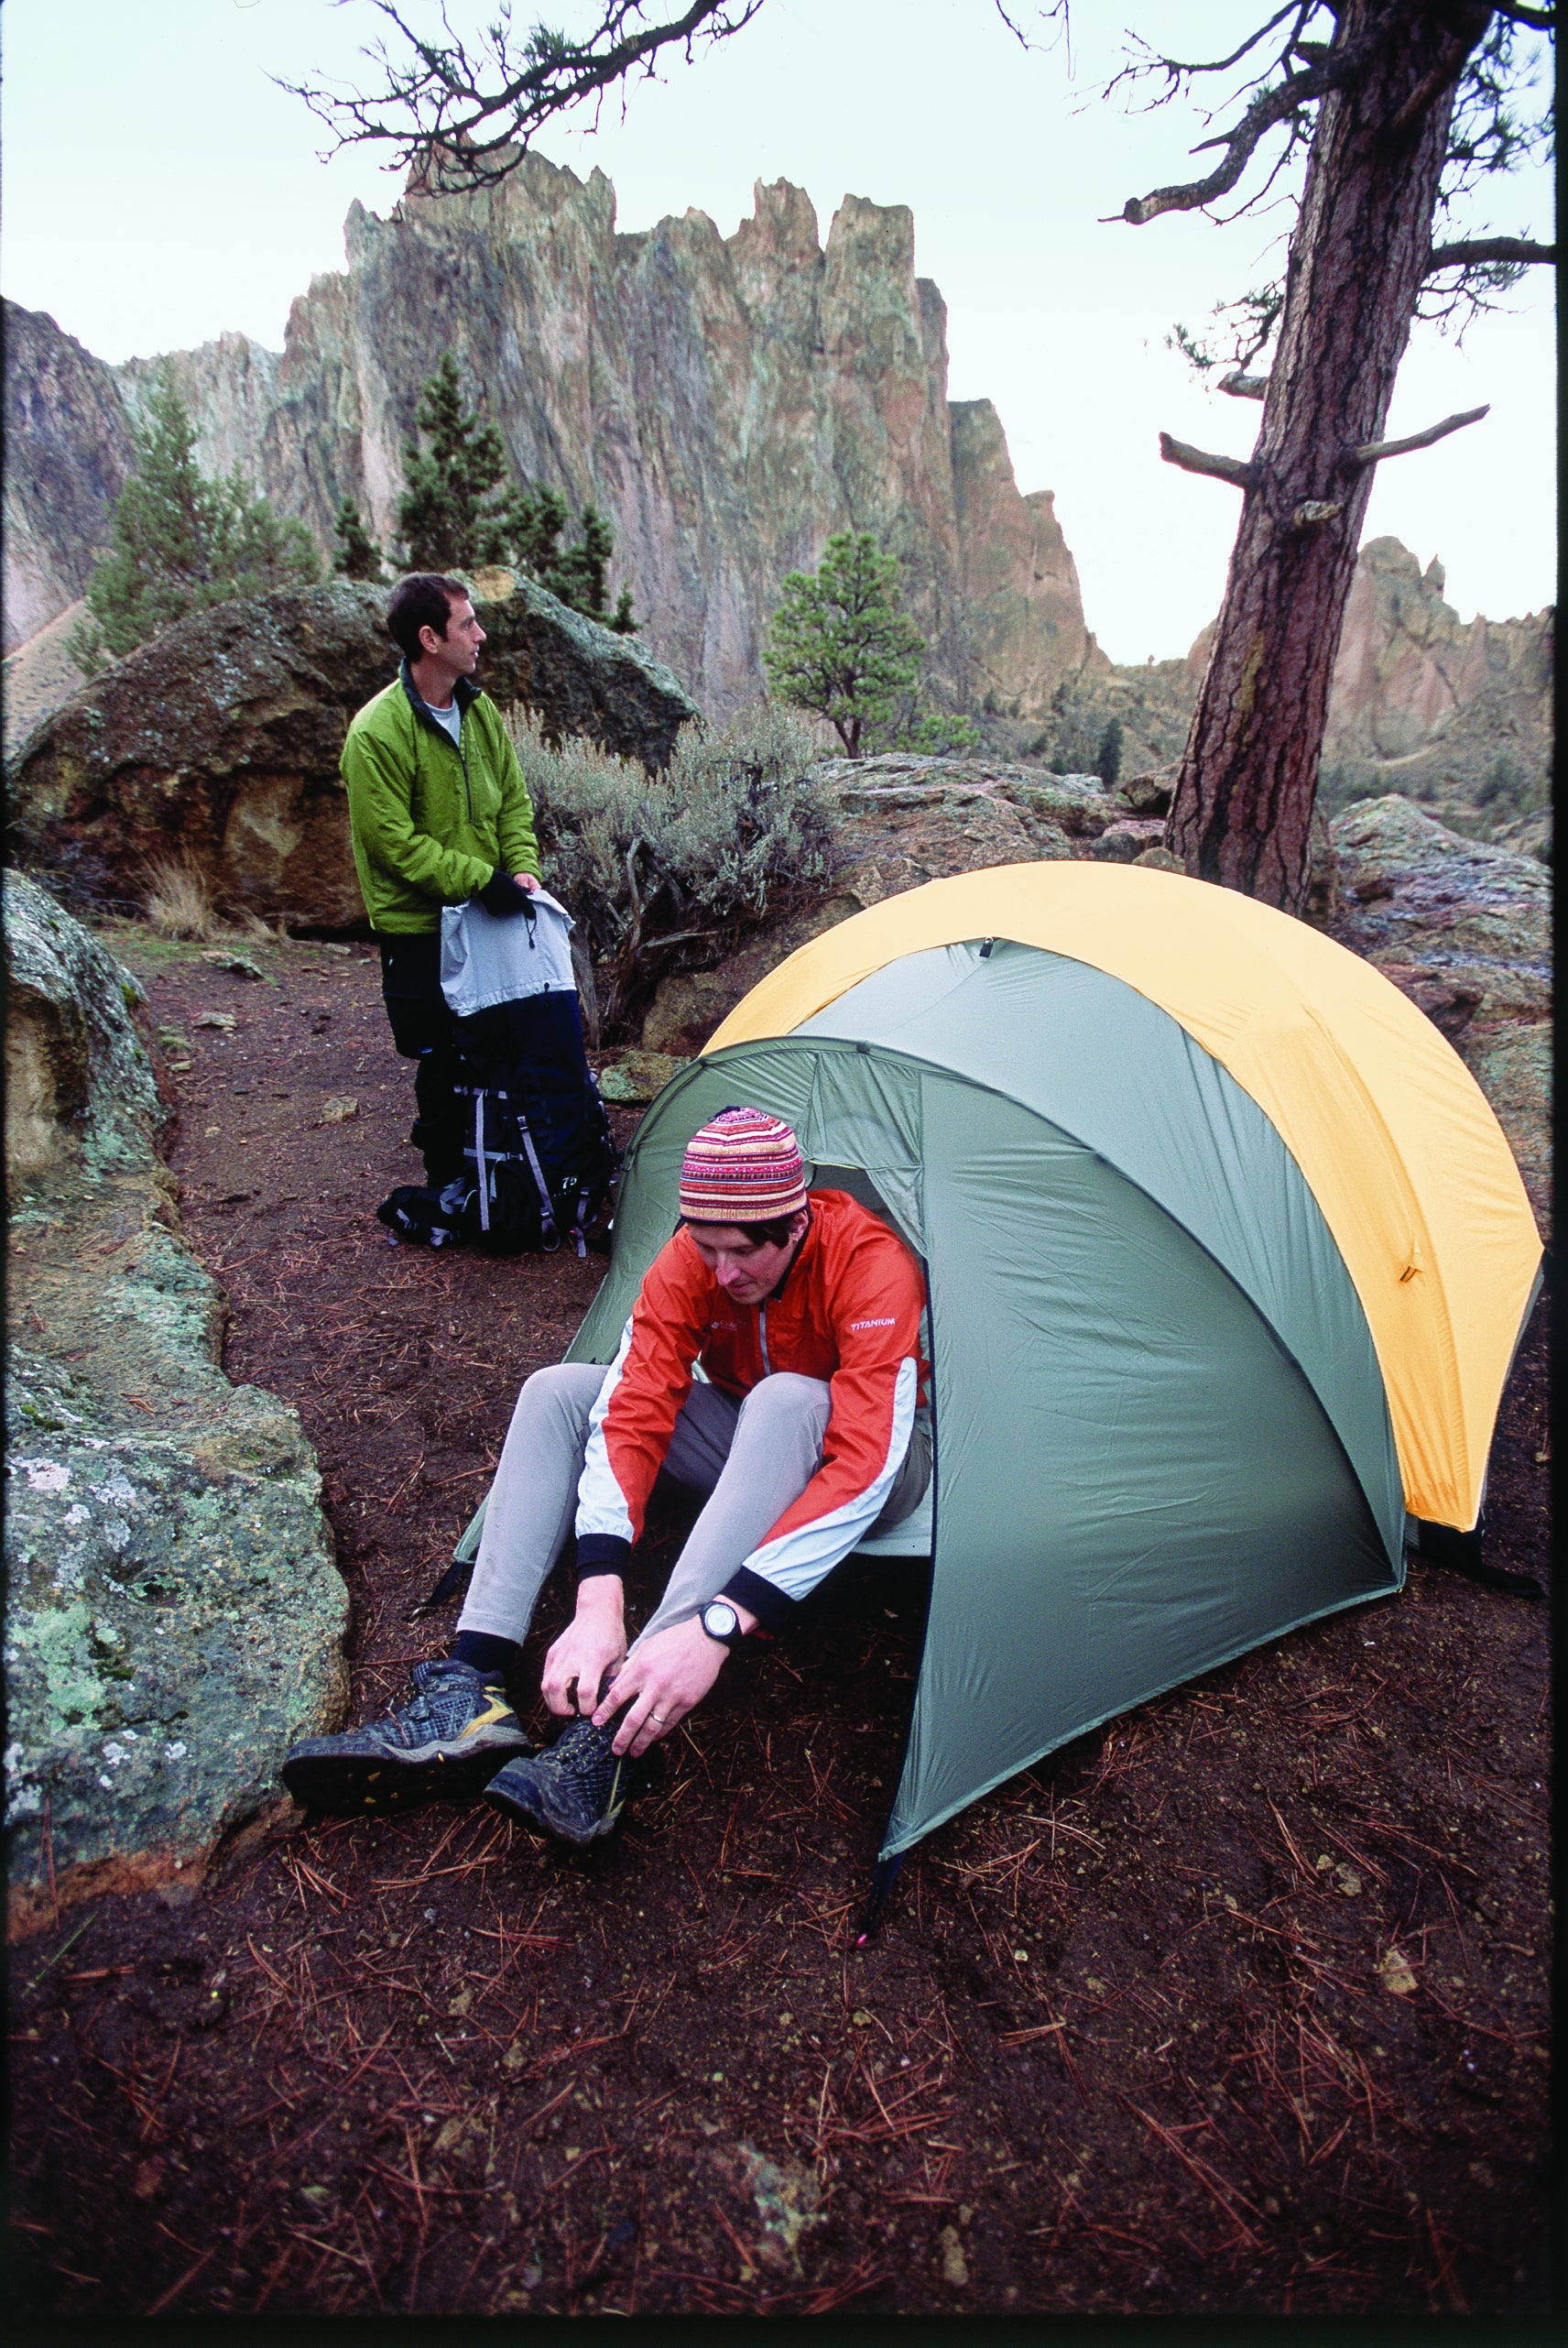 Sierra Designs Nomad 6 Camping Tent Review – TreeLineBackpacker